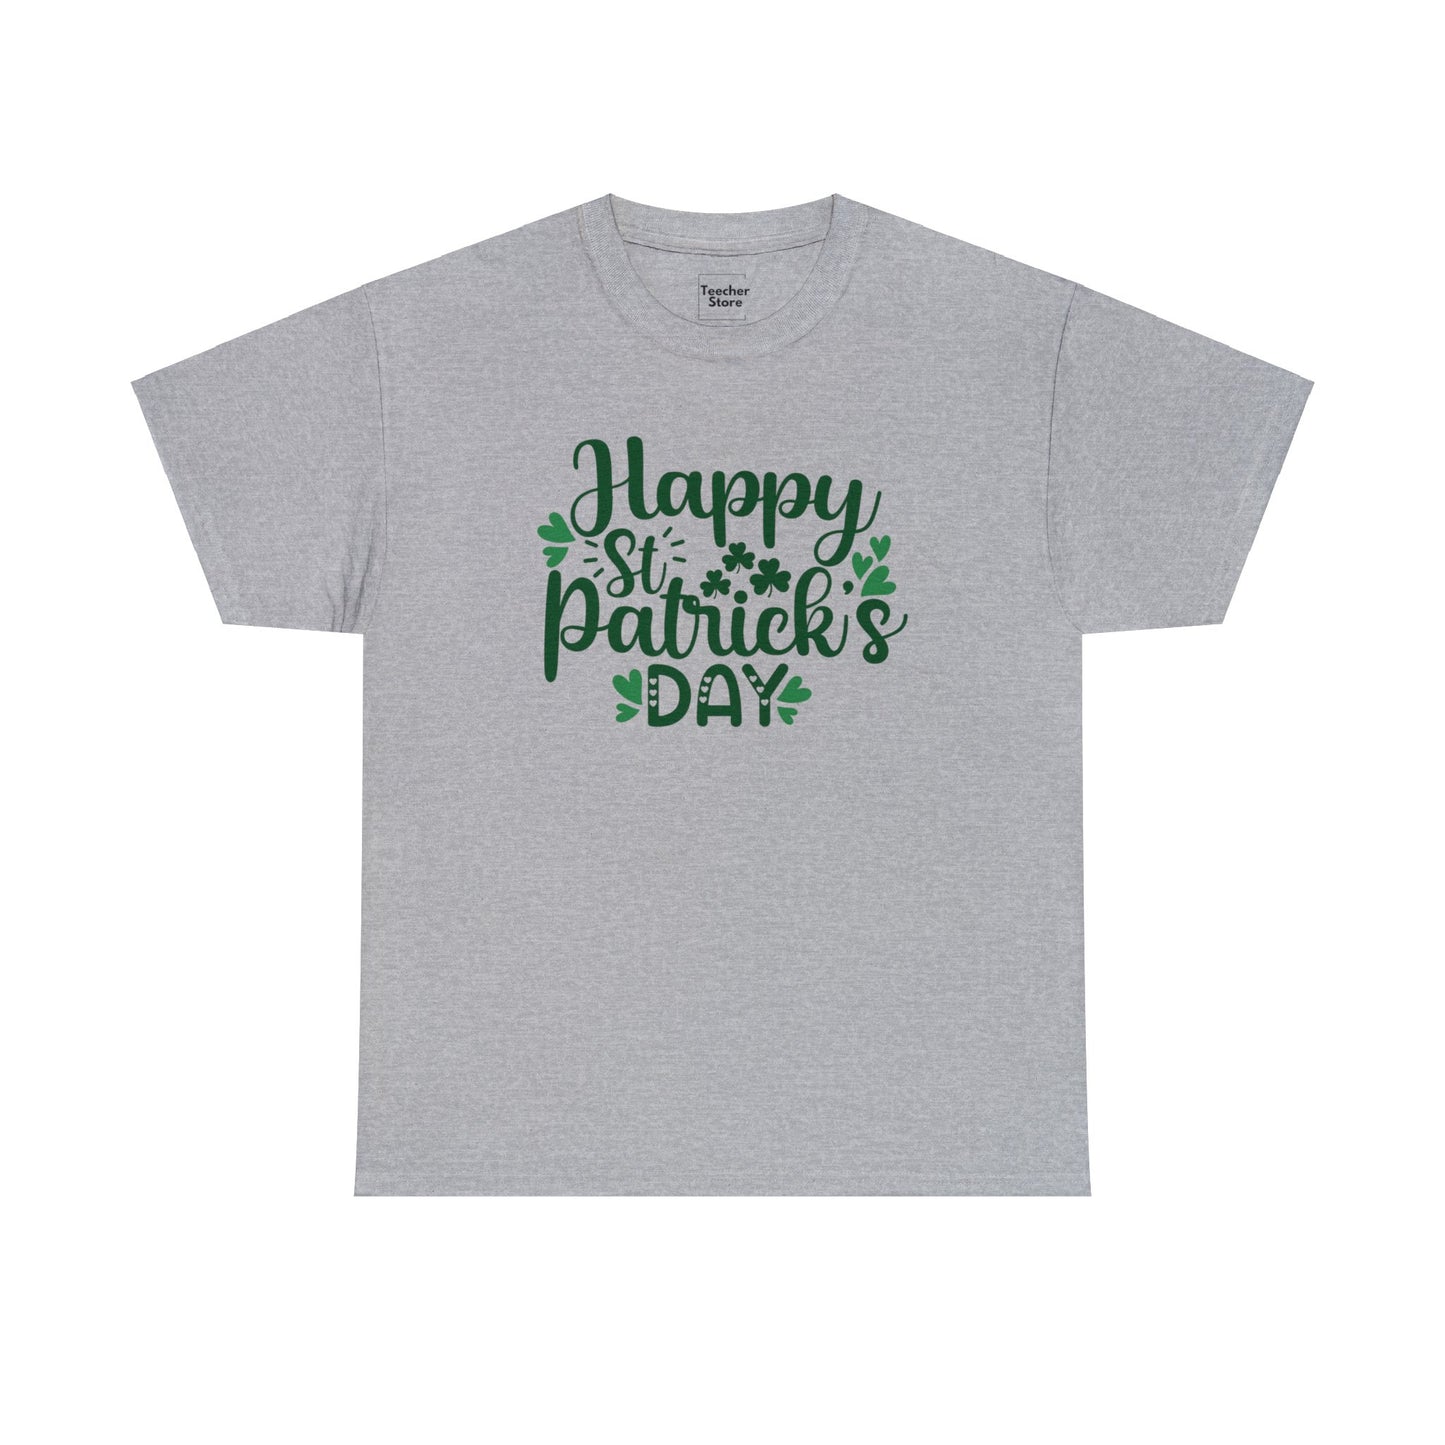 St. Patrick's Day Tee-Shirt